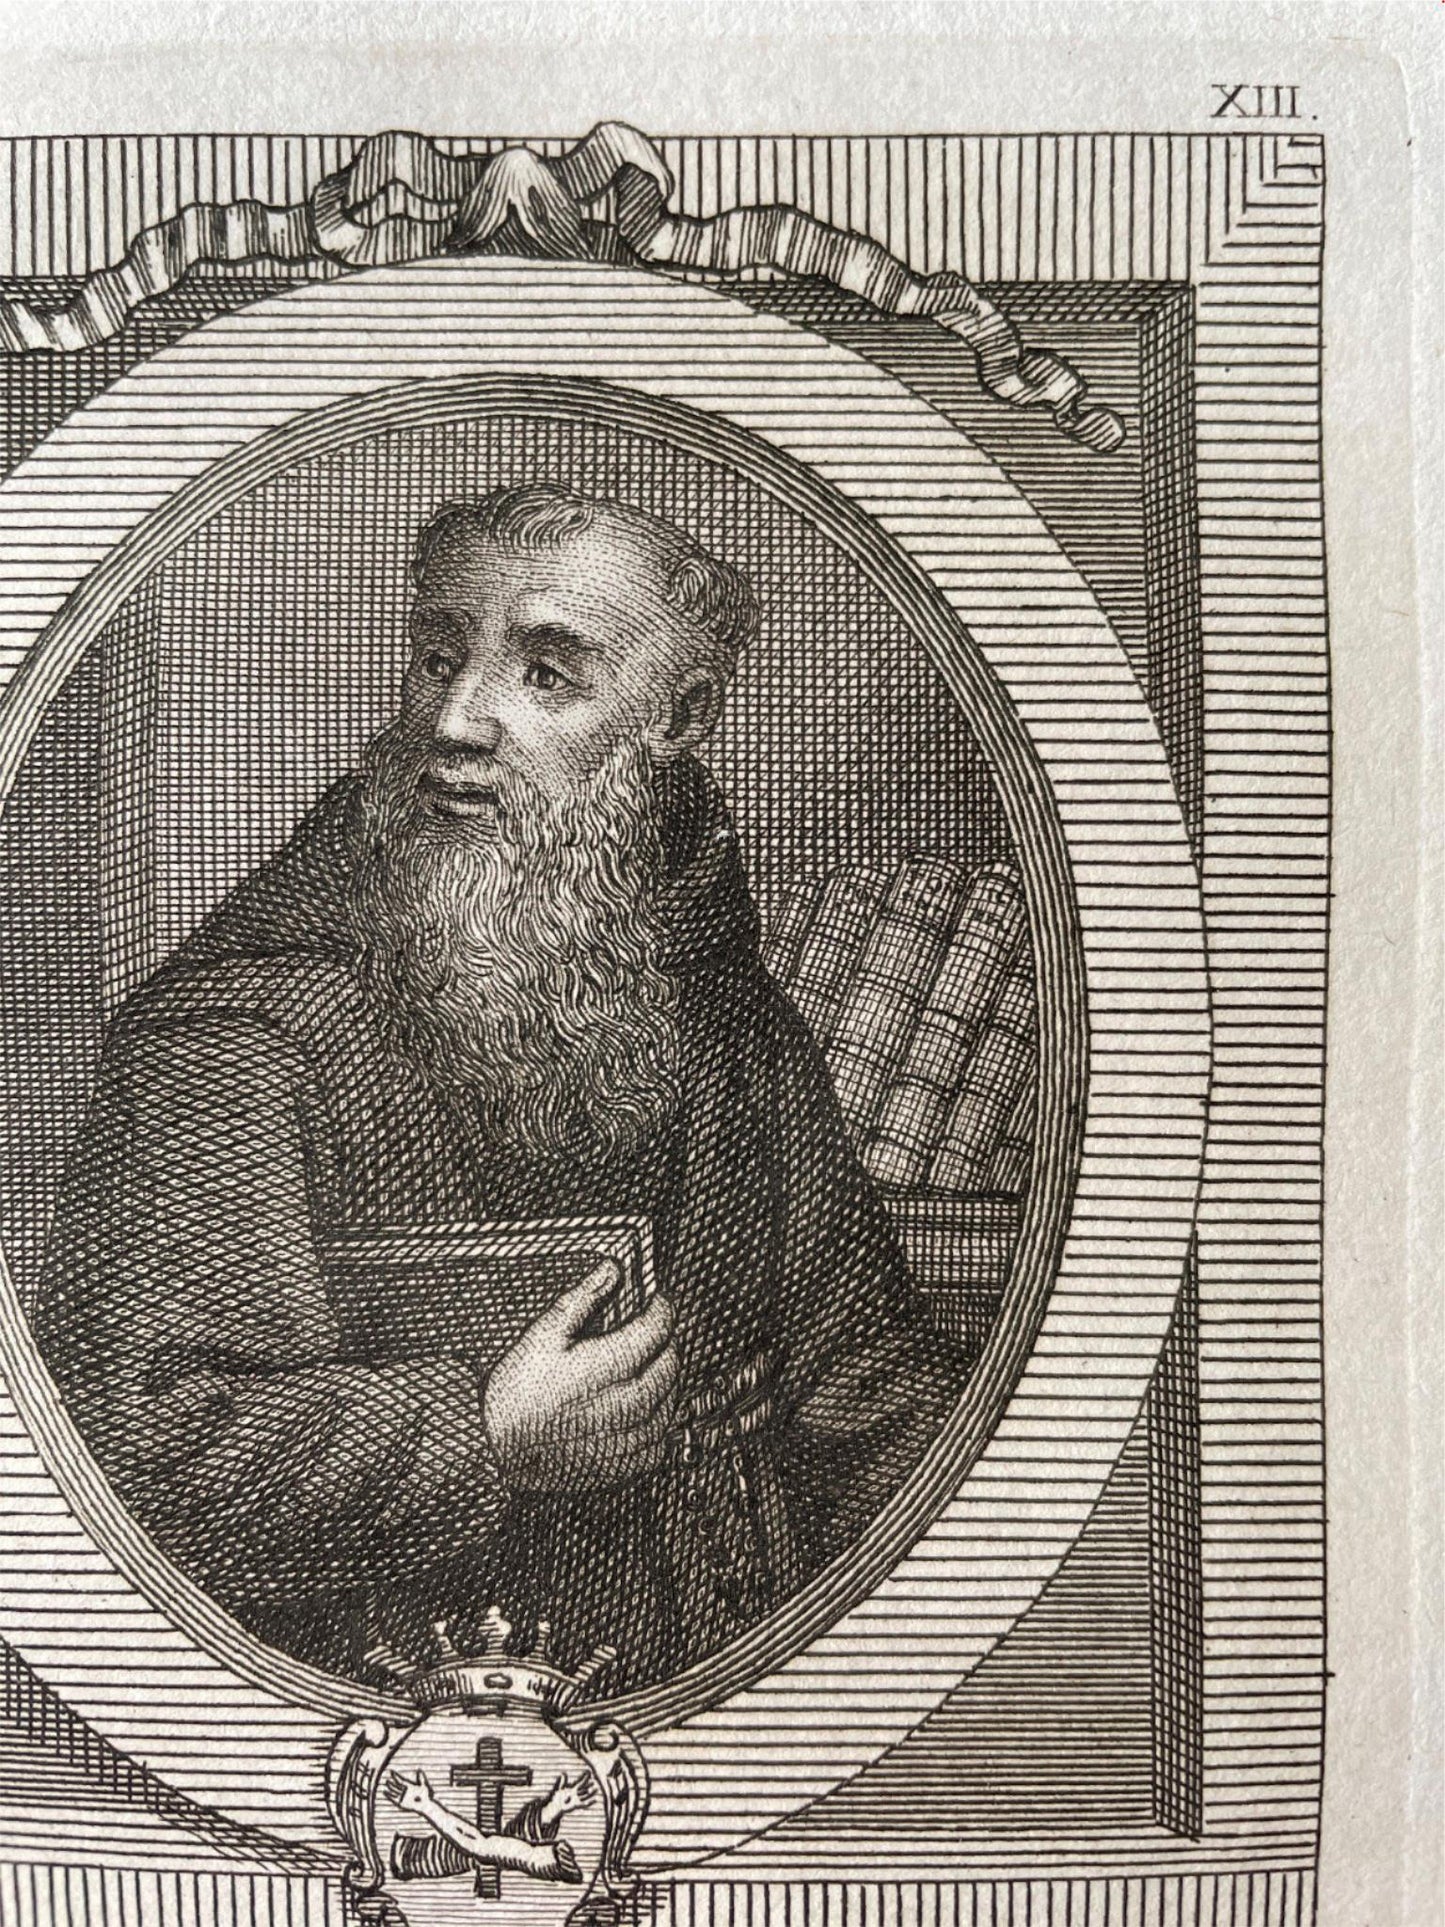 Antique Print - Church Dignitary - Luigi Cunego - Fr. Jacobus a Melficto - Dahlströms Fine Art